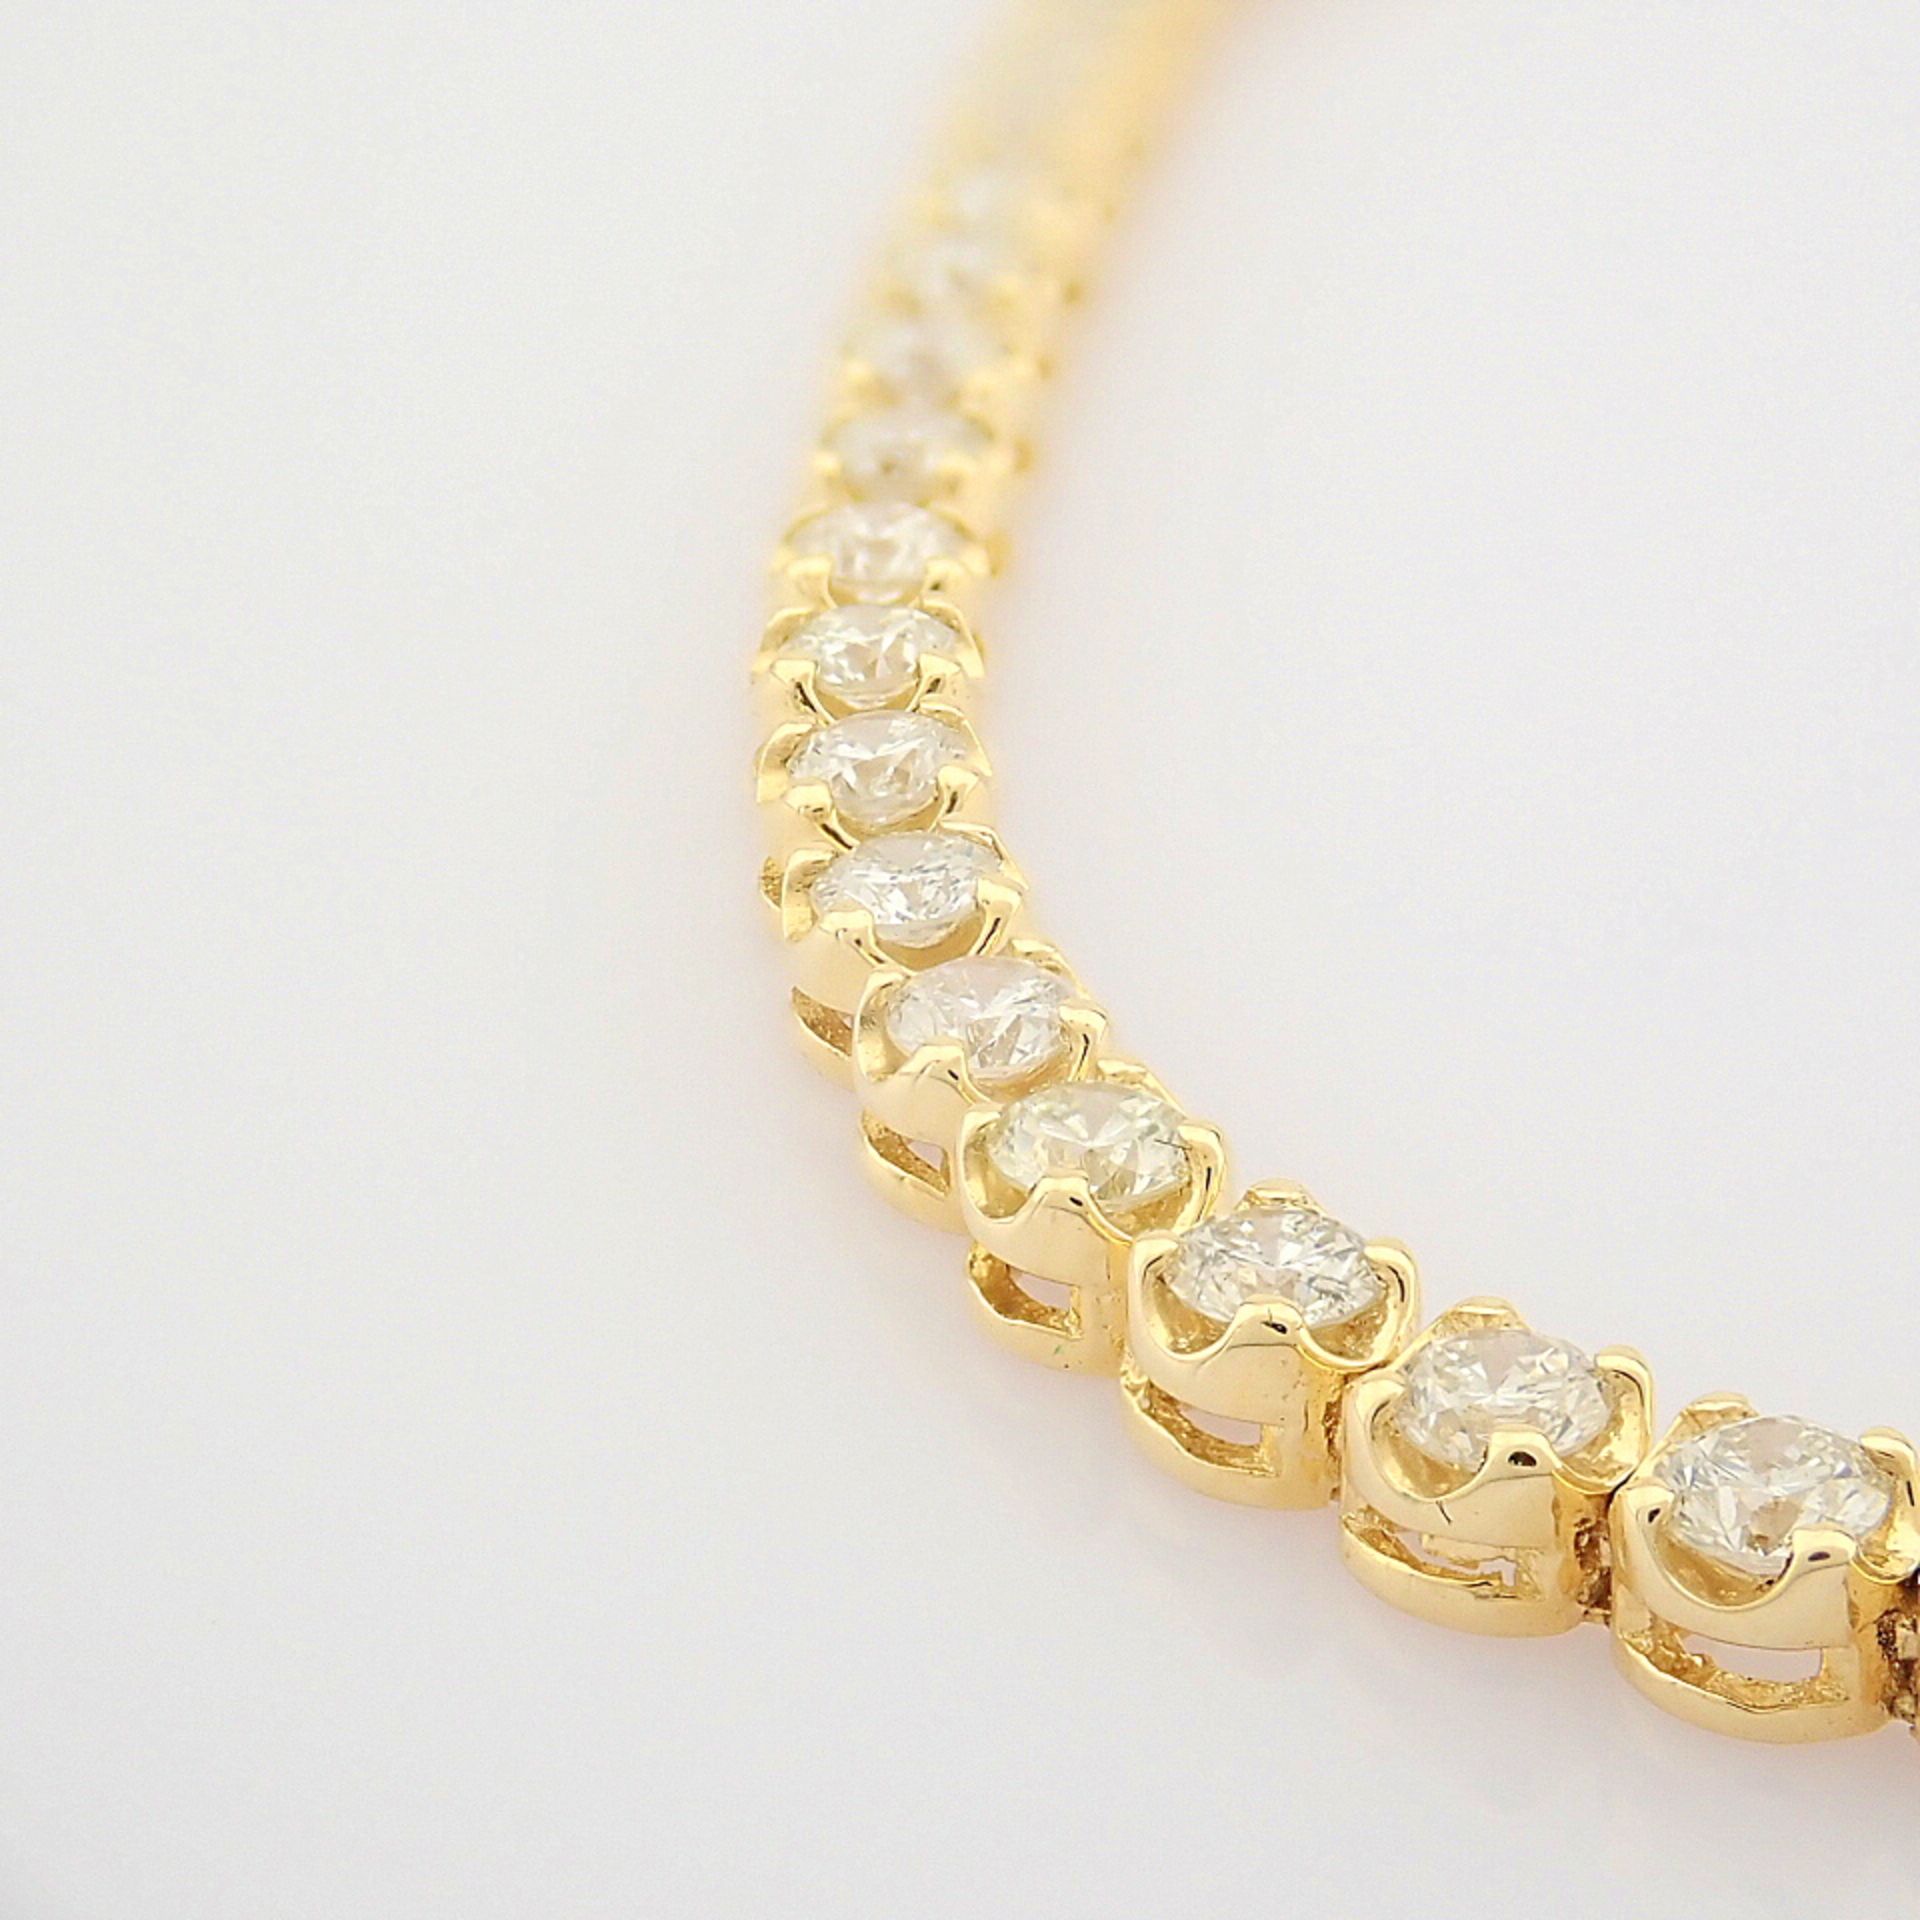 2,10 Ct. Diamond Tennis Bracelet (Crown) - 14K Yellow Gold - Image 9 of 14